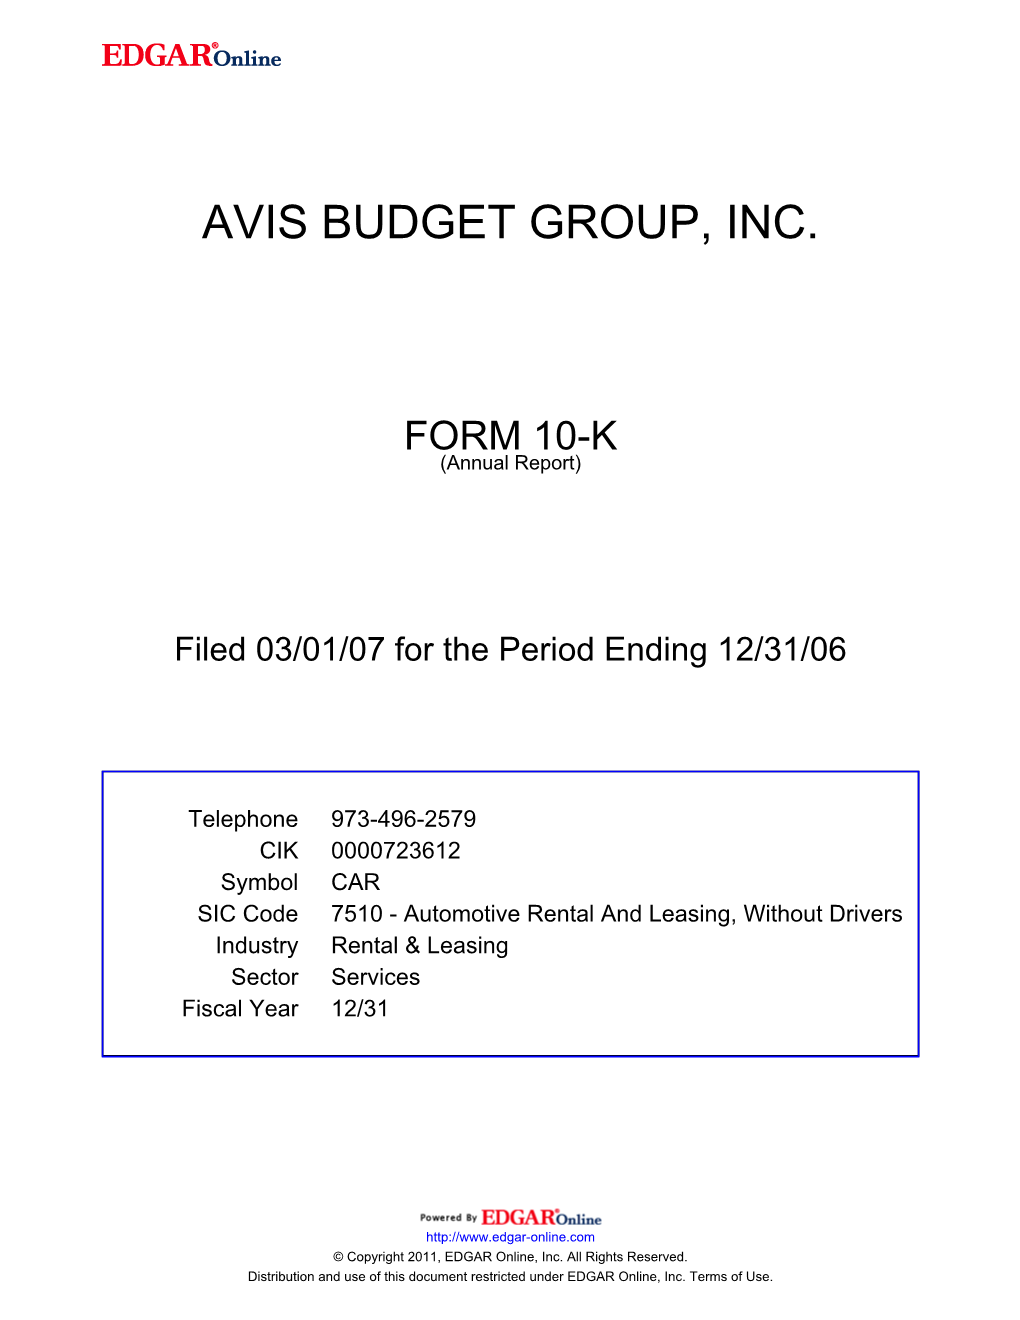 Avis Budget Group, Inc